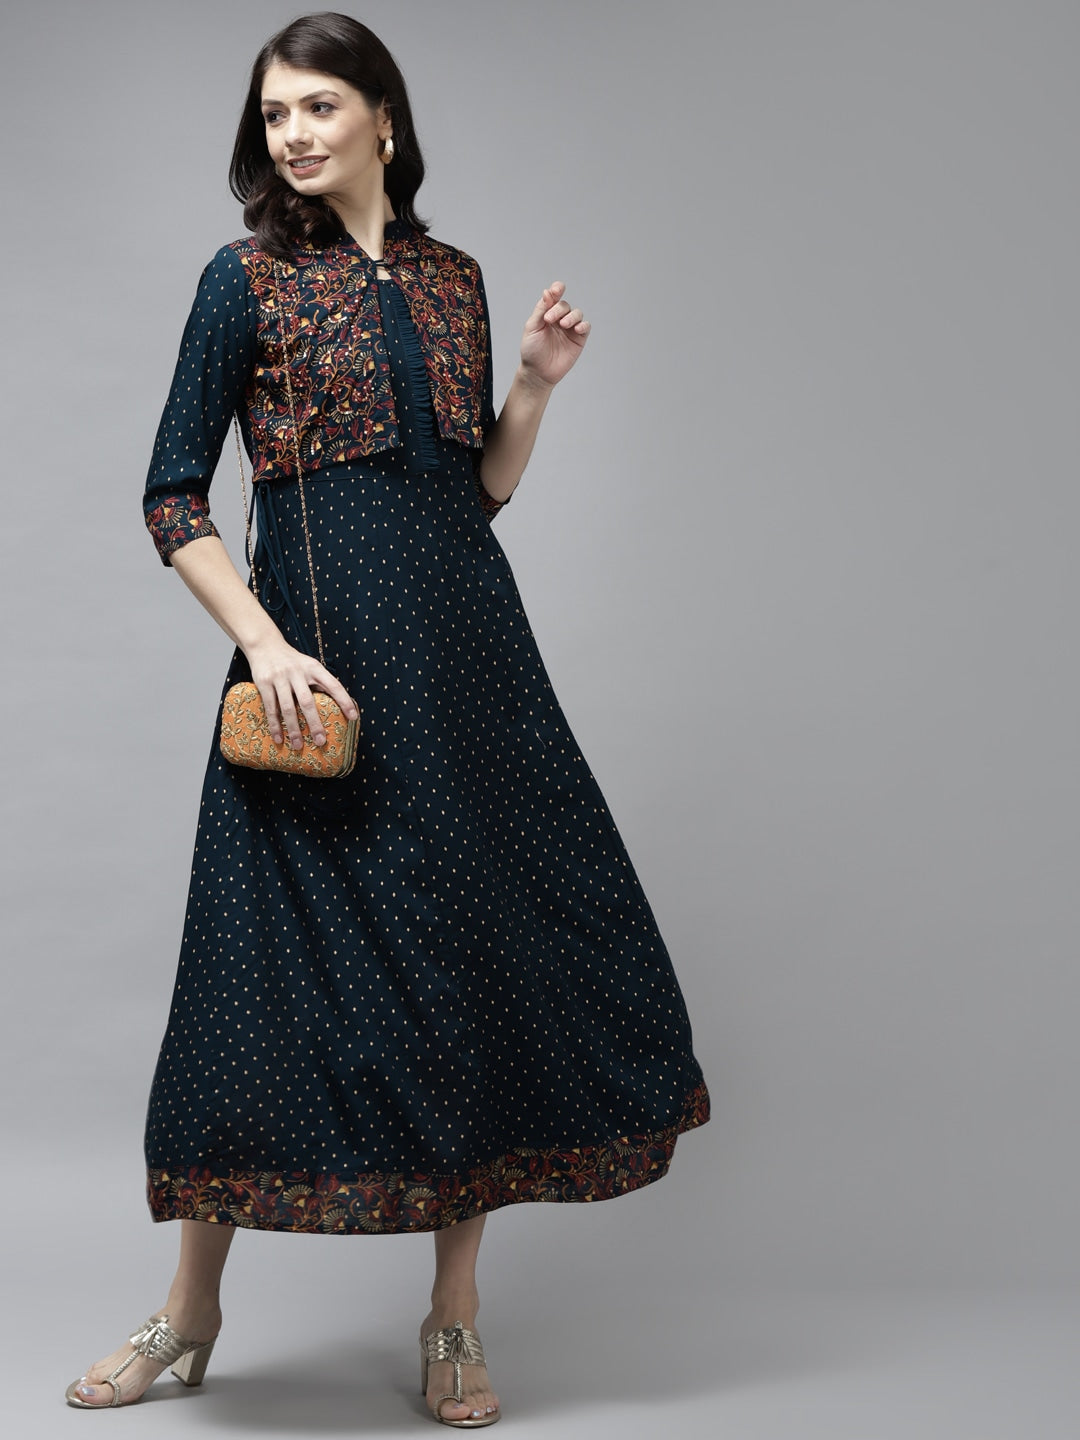 Navy Blue Ethnic A-Line Dress-Yufta Store-5803DRSBLS